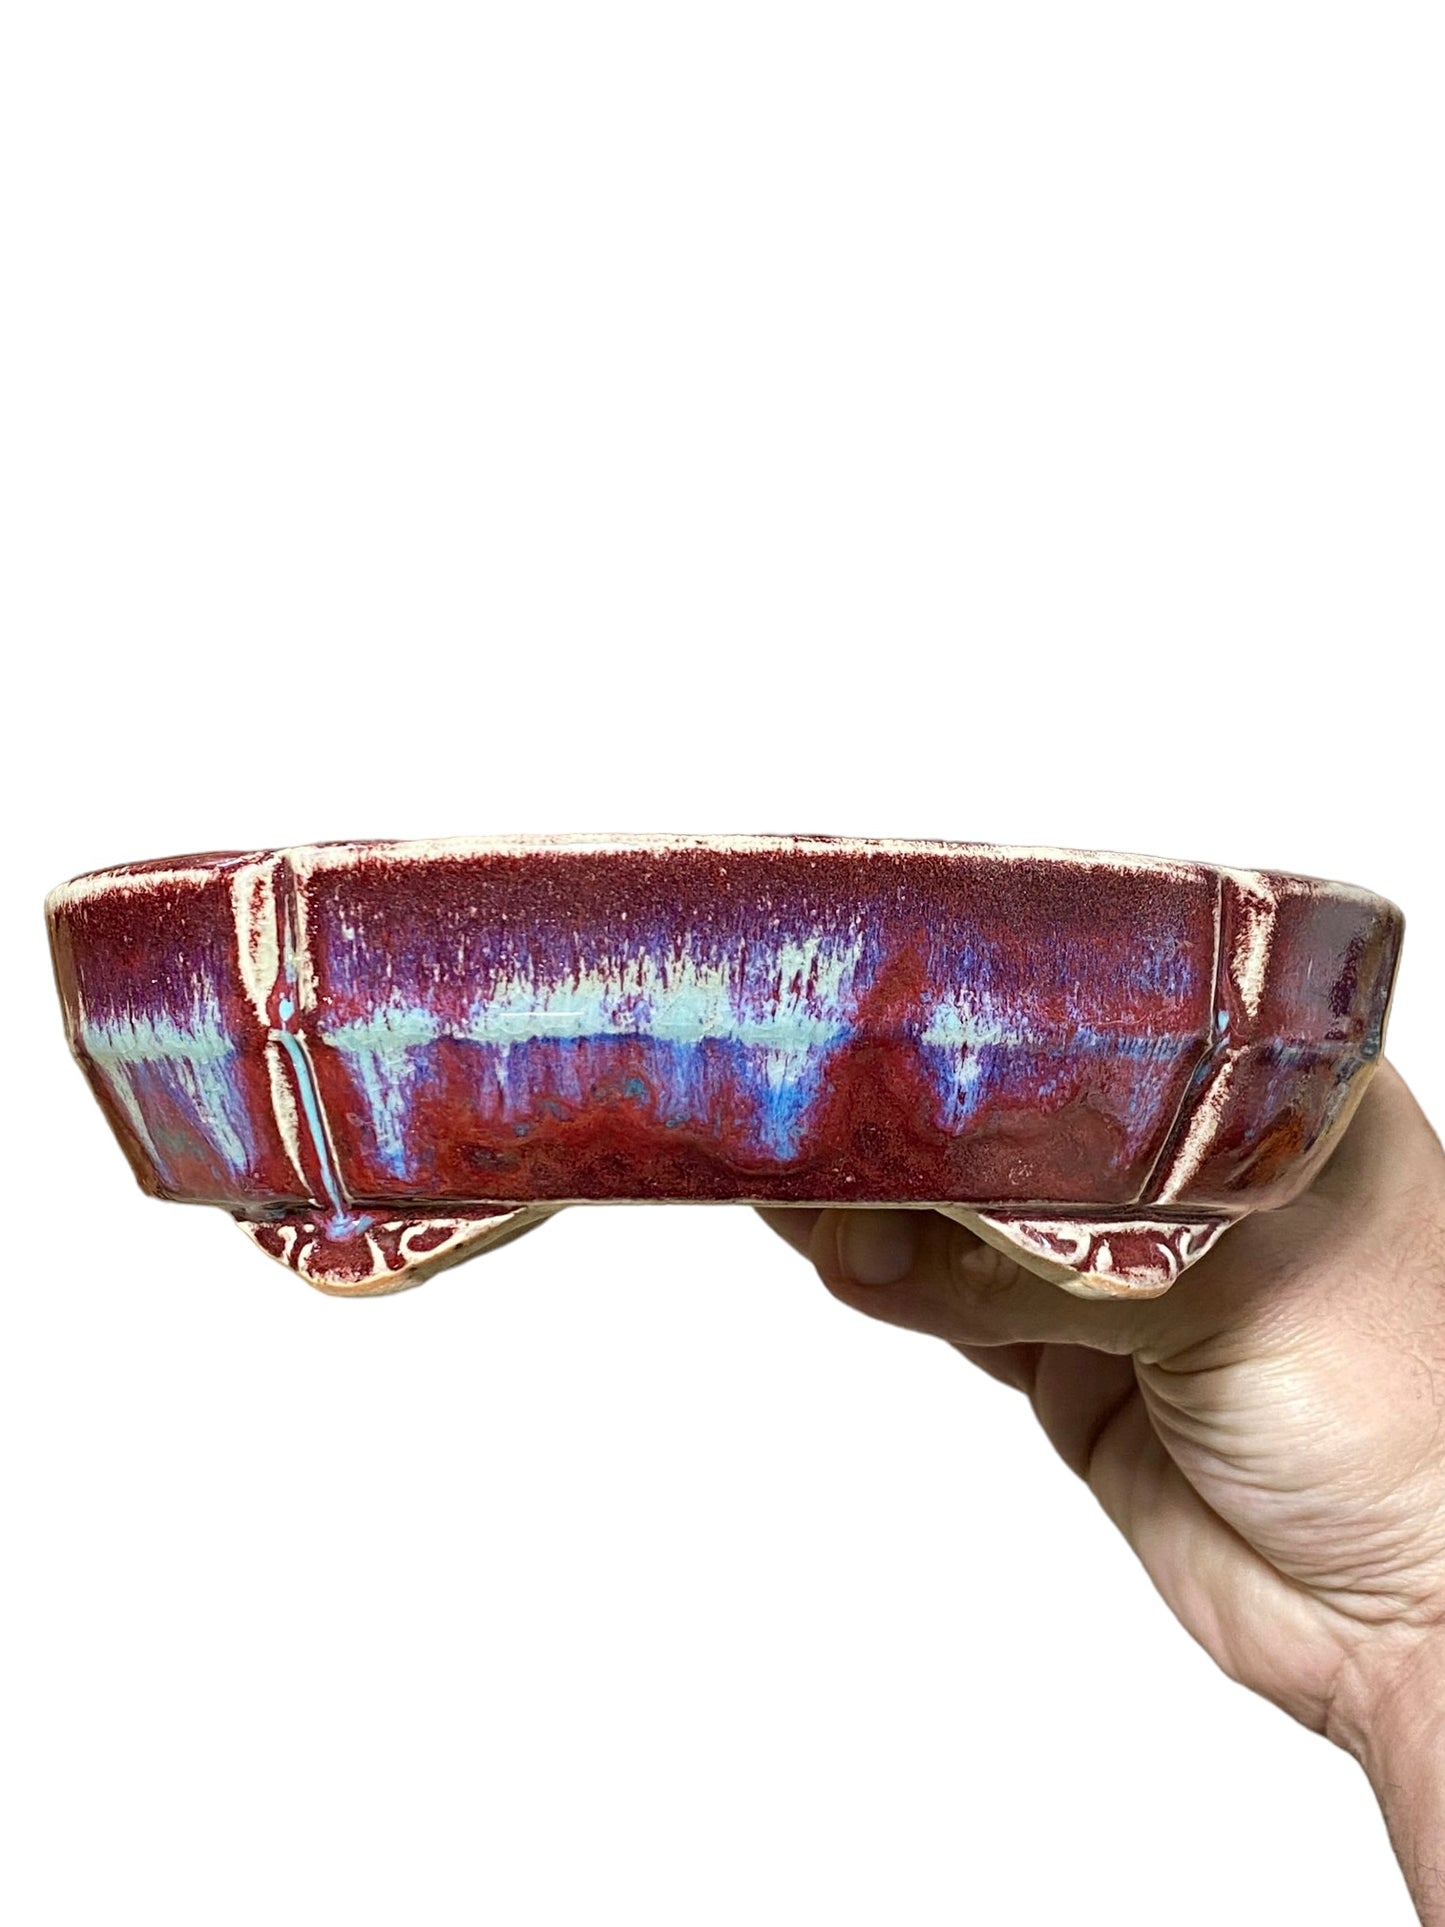 Koyo - Rare Red and Blue Glazed Oval Bonsai Pot